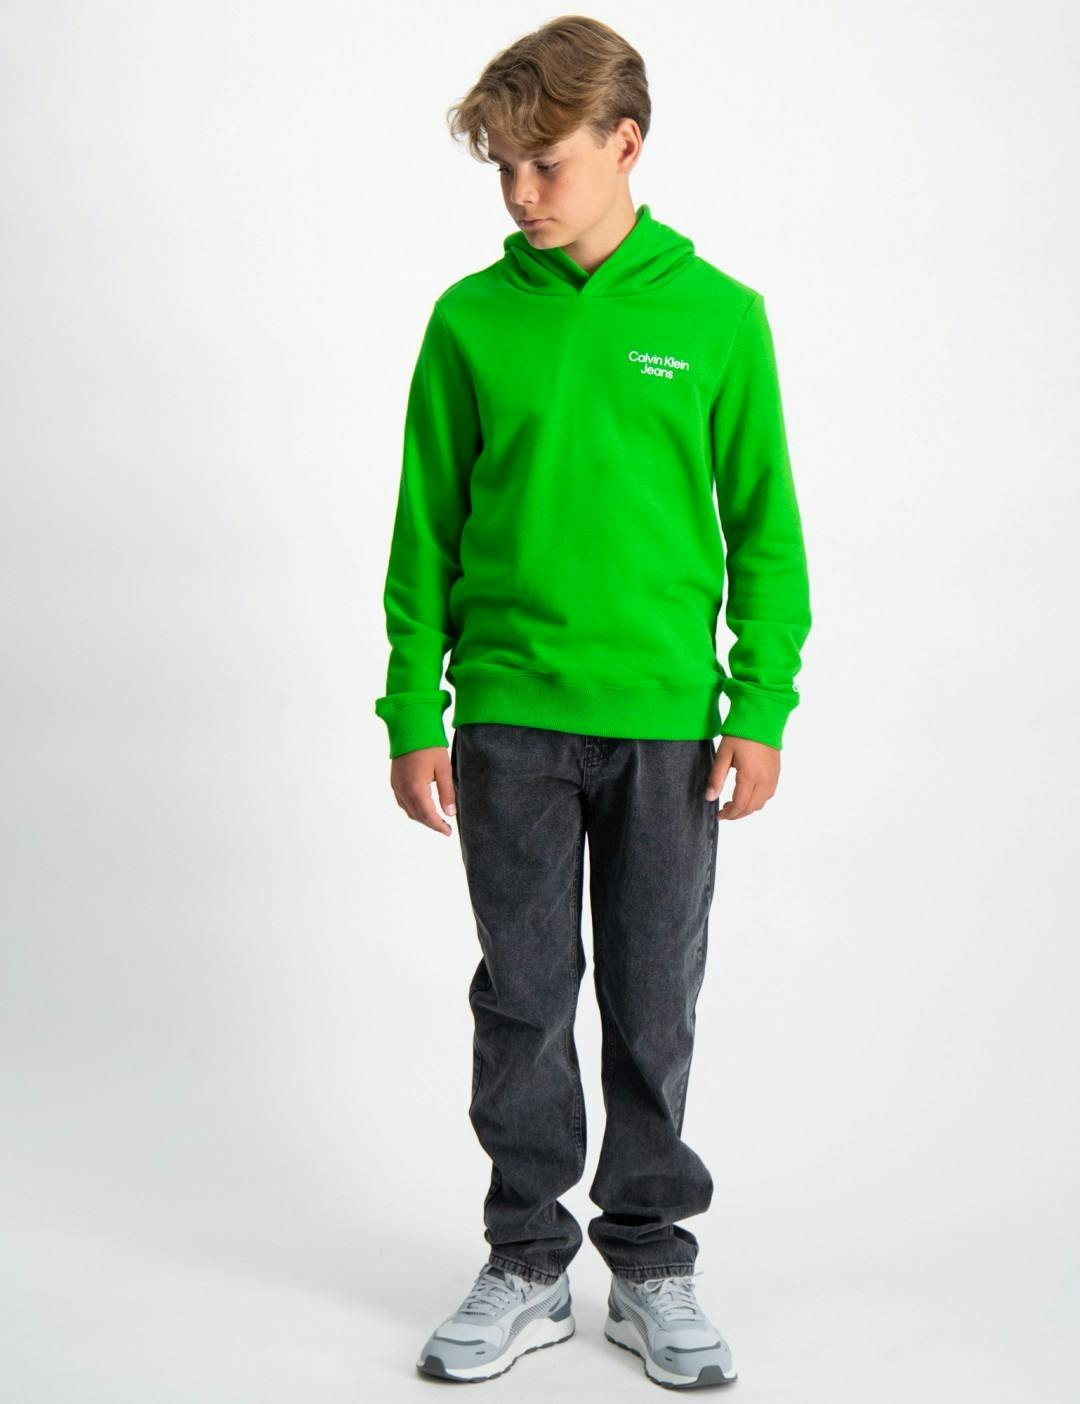 STACK | Brand CKJ HOODIE LOGO Kille Kids Store Grön för